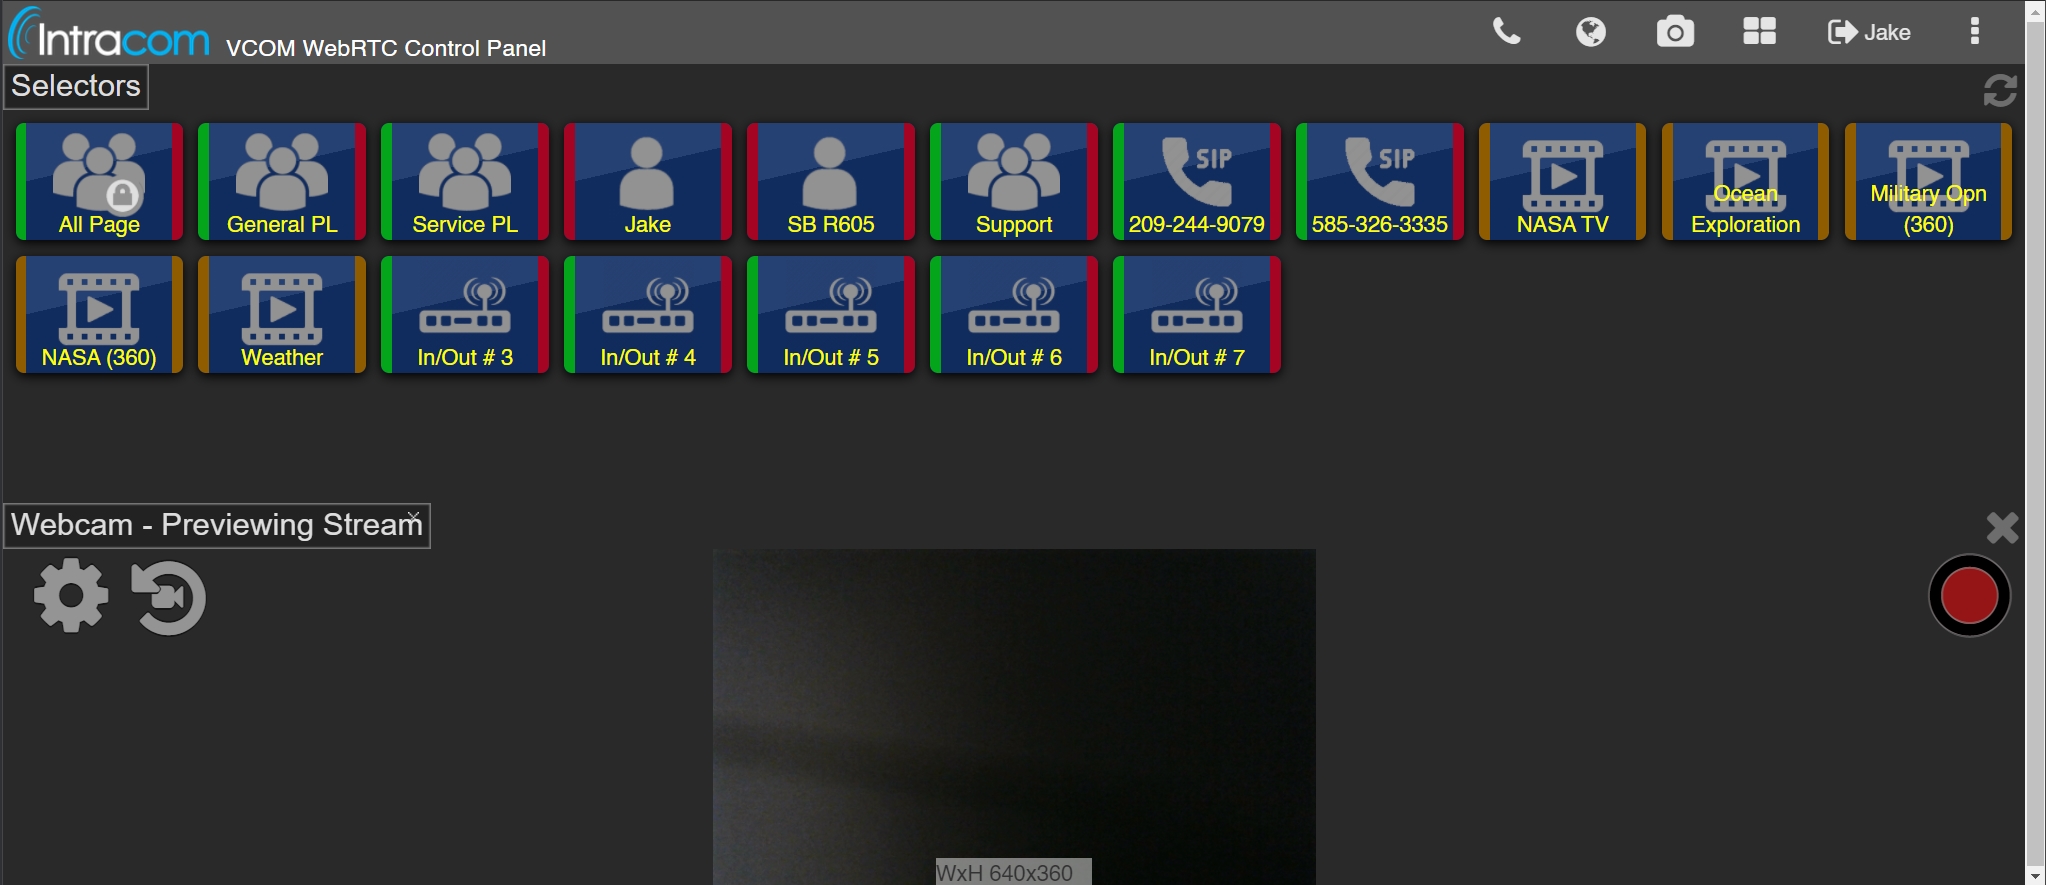 screenshot of vcom webrtc control panel with video streaming menu shown